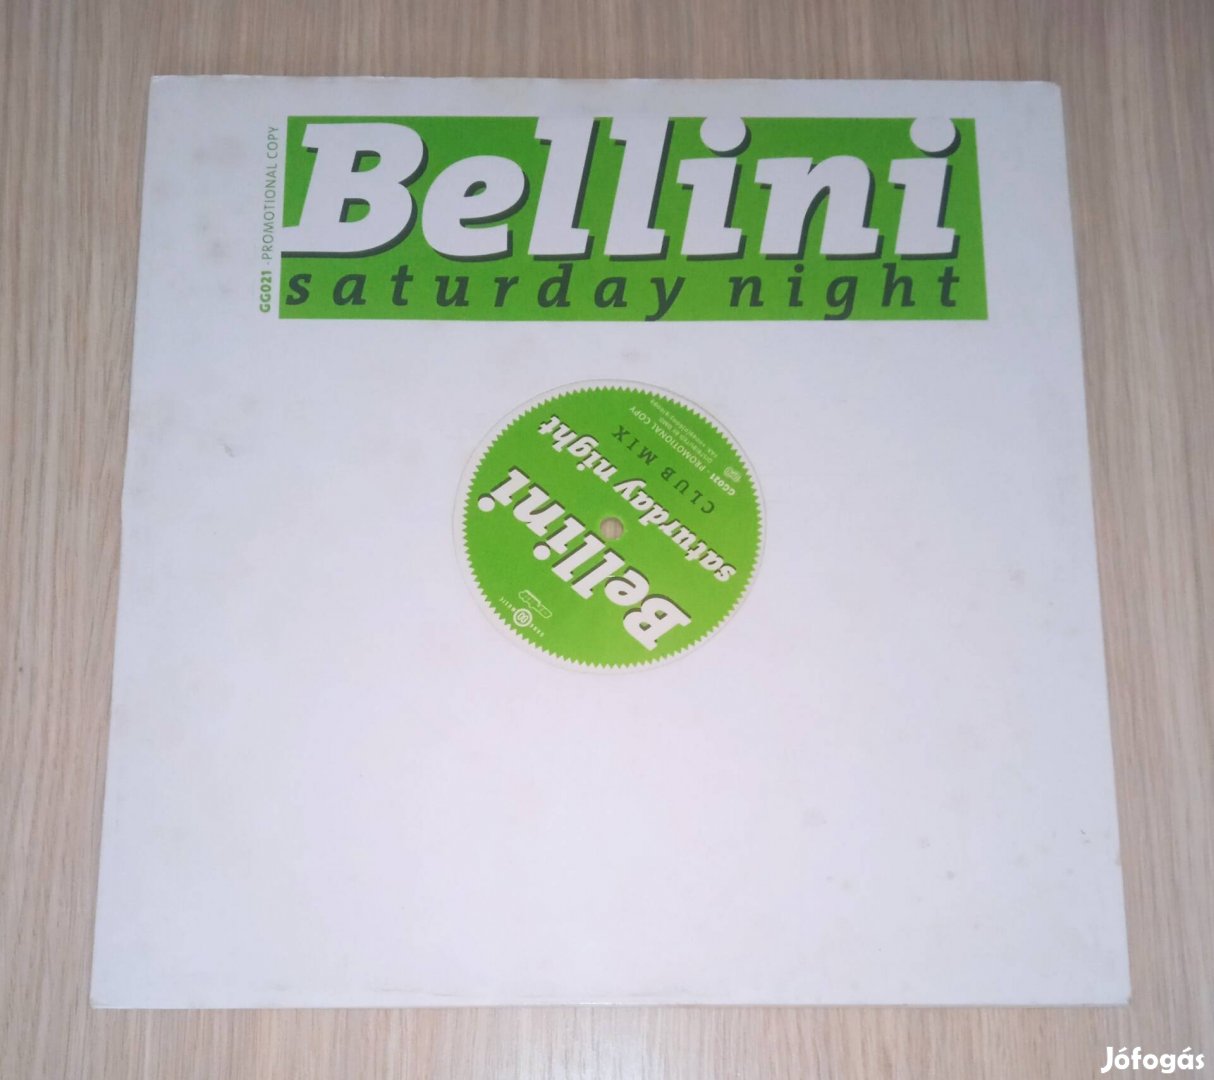 Bellini - Saturday Night (Vinyl)